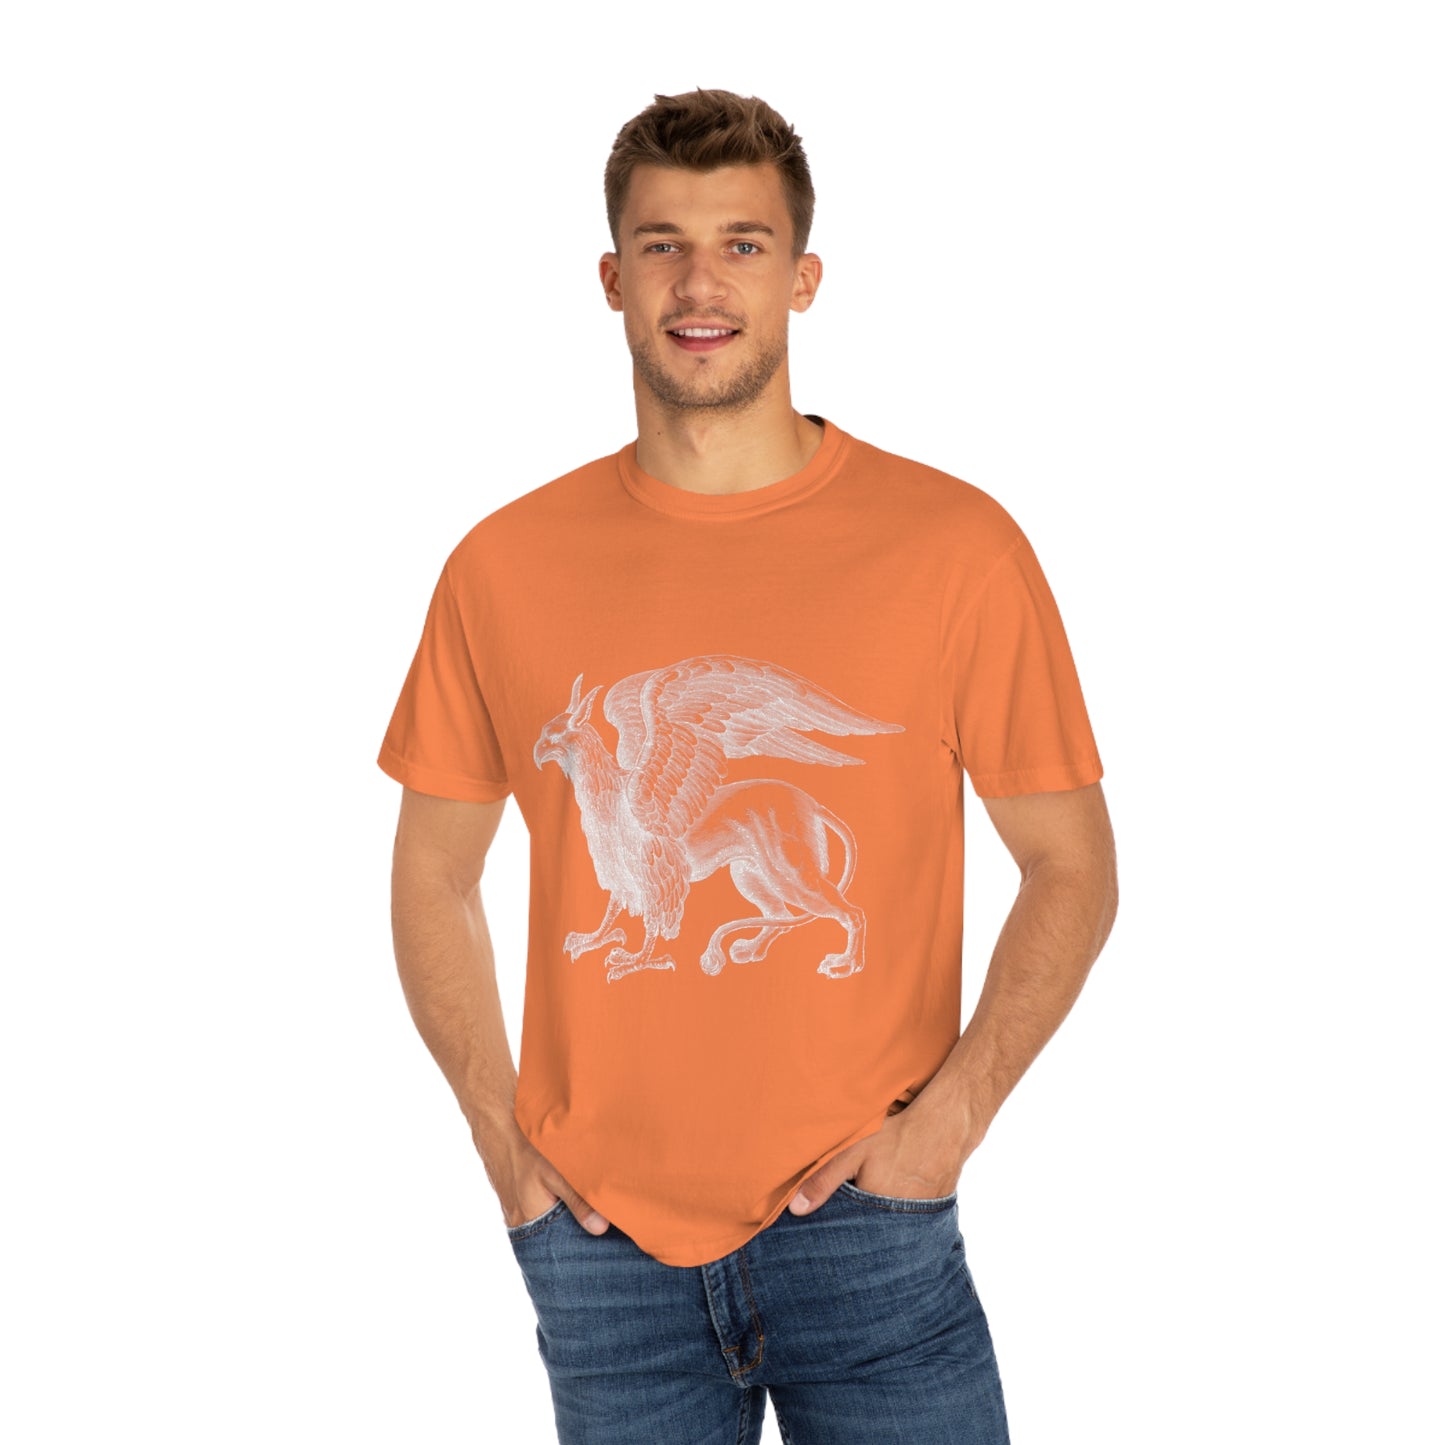 Griffon Print Shirt